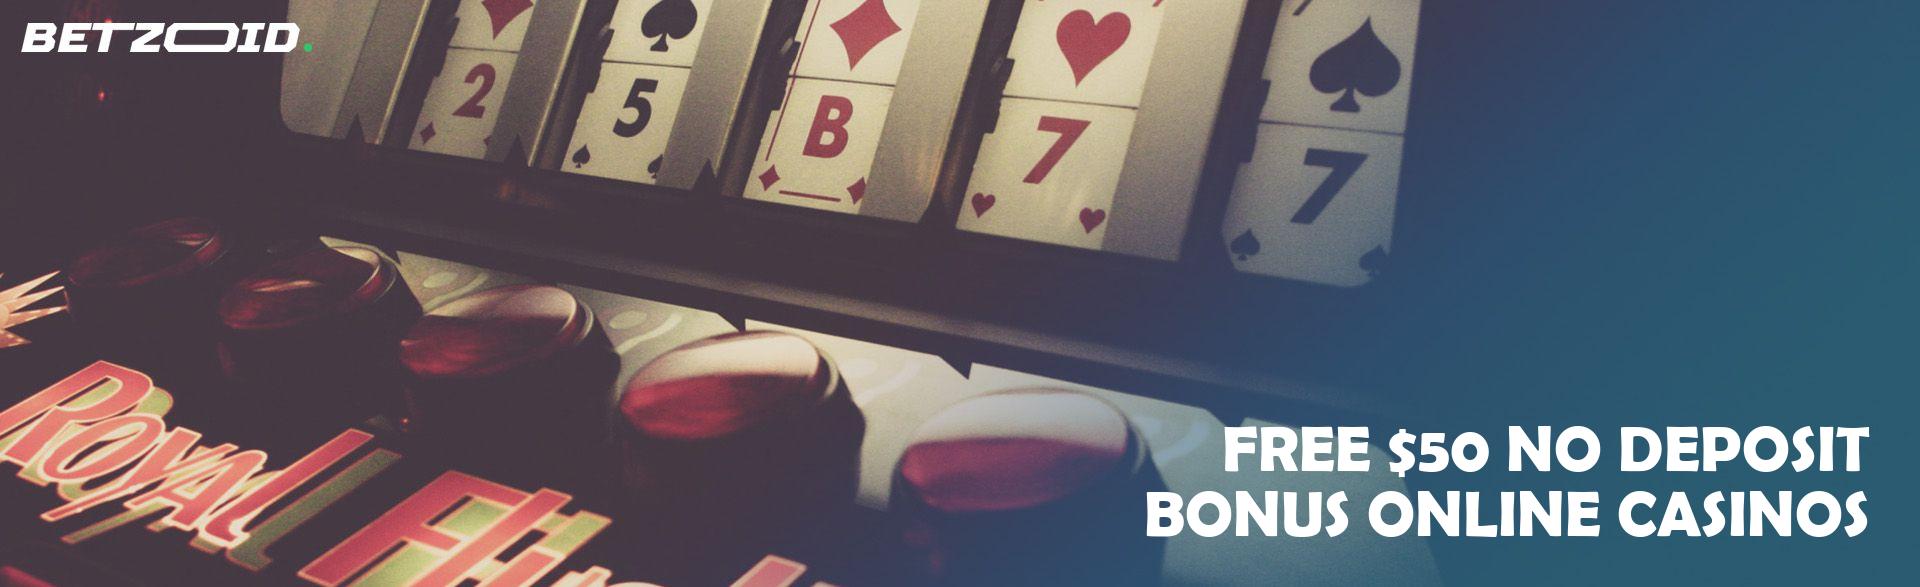 Free $50 No Deposit Bonus Online Casinos.